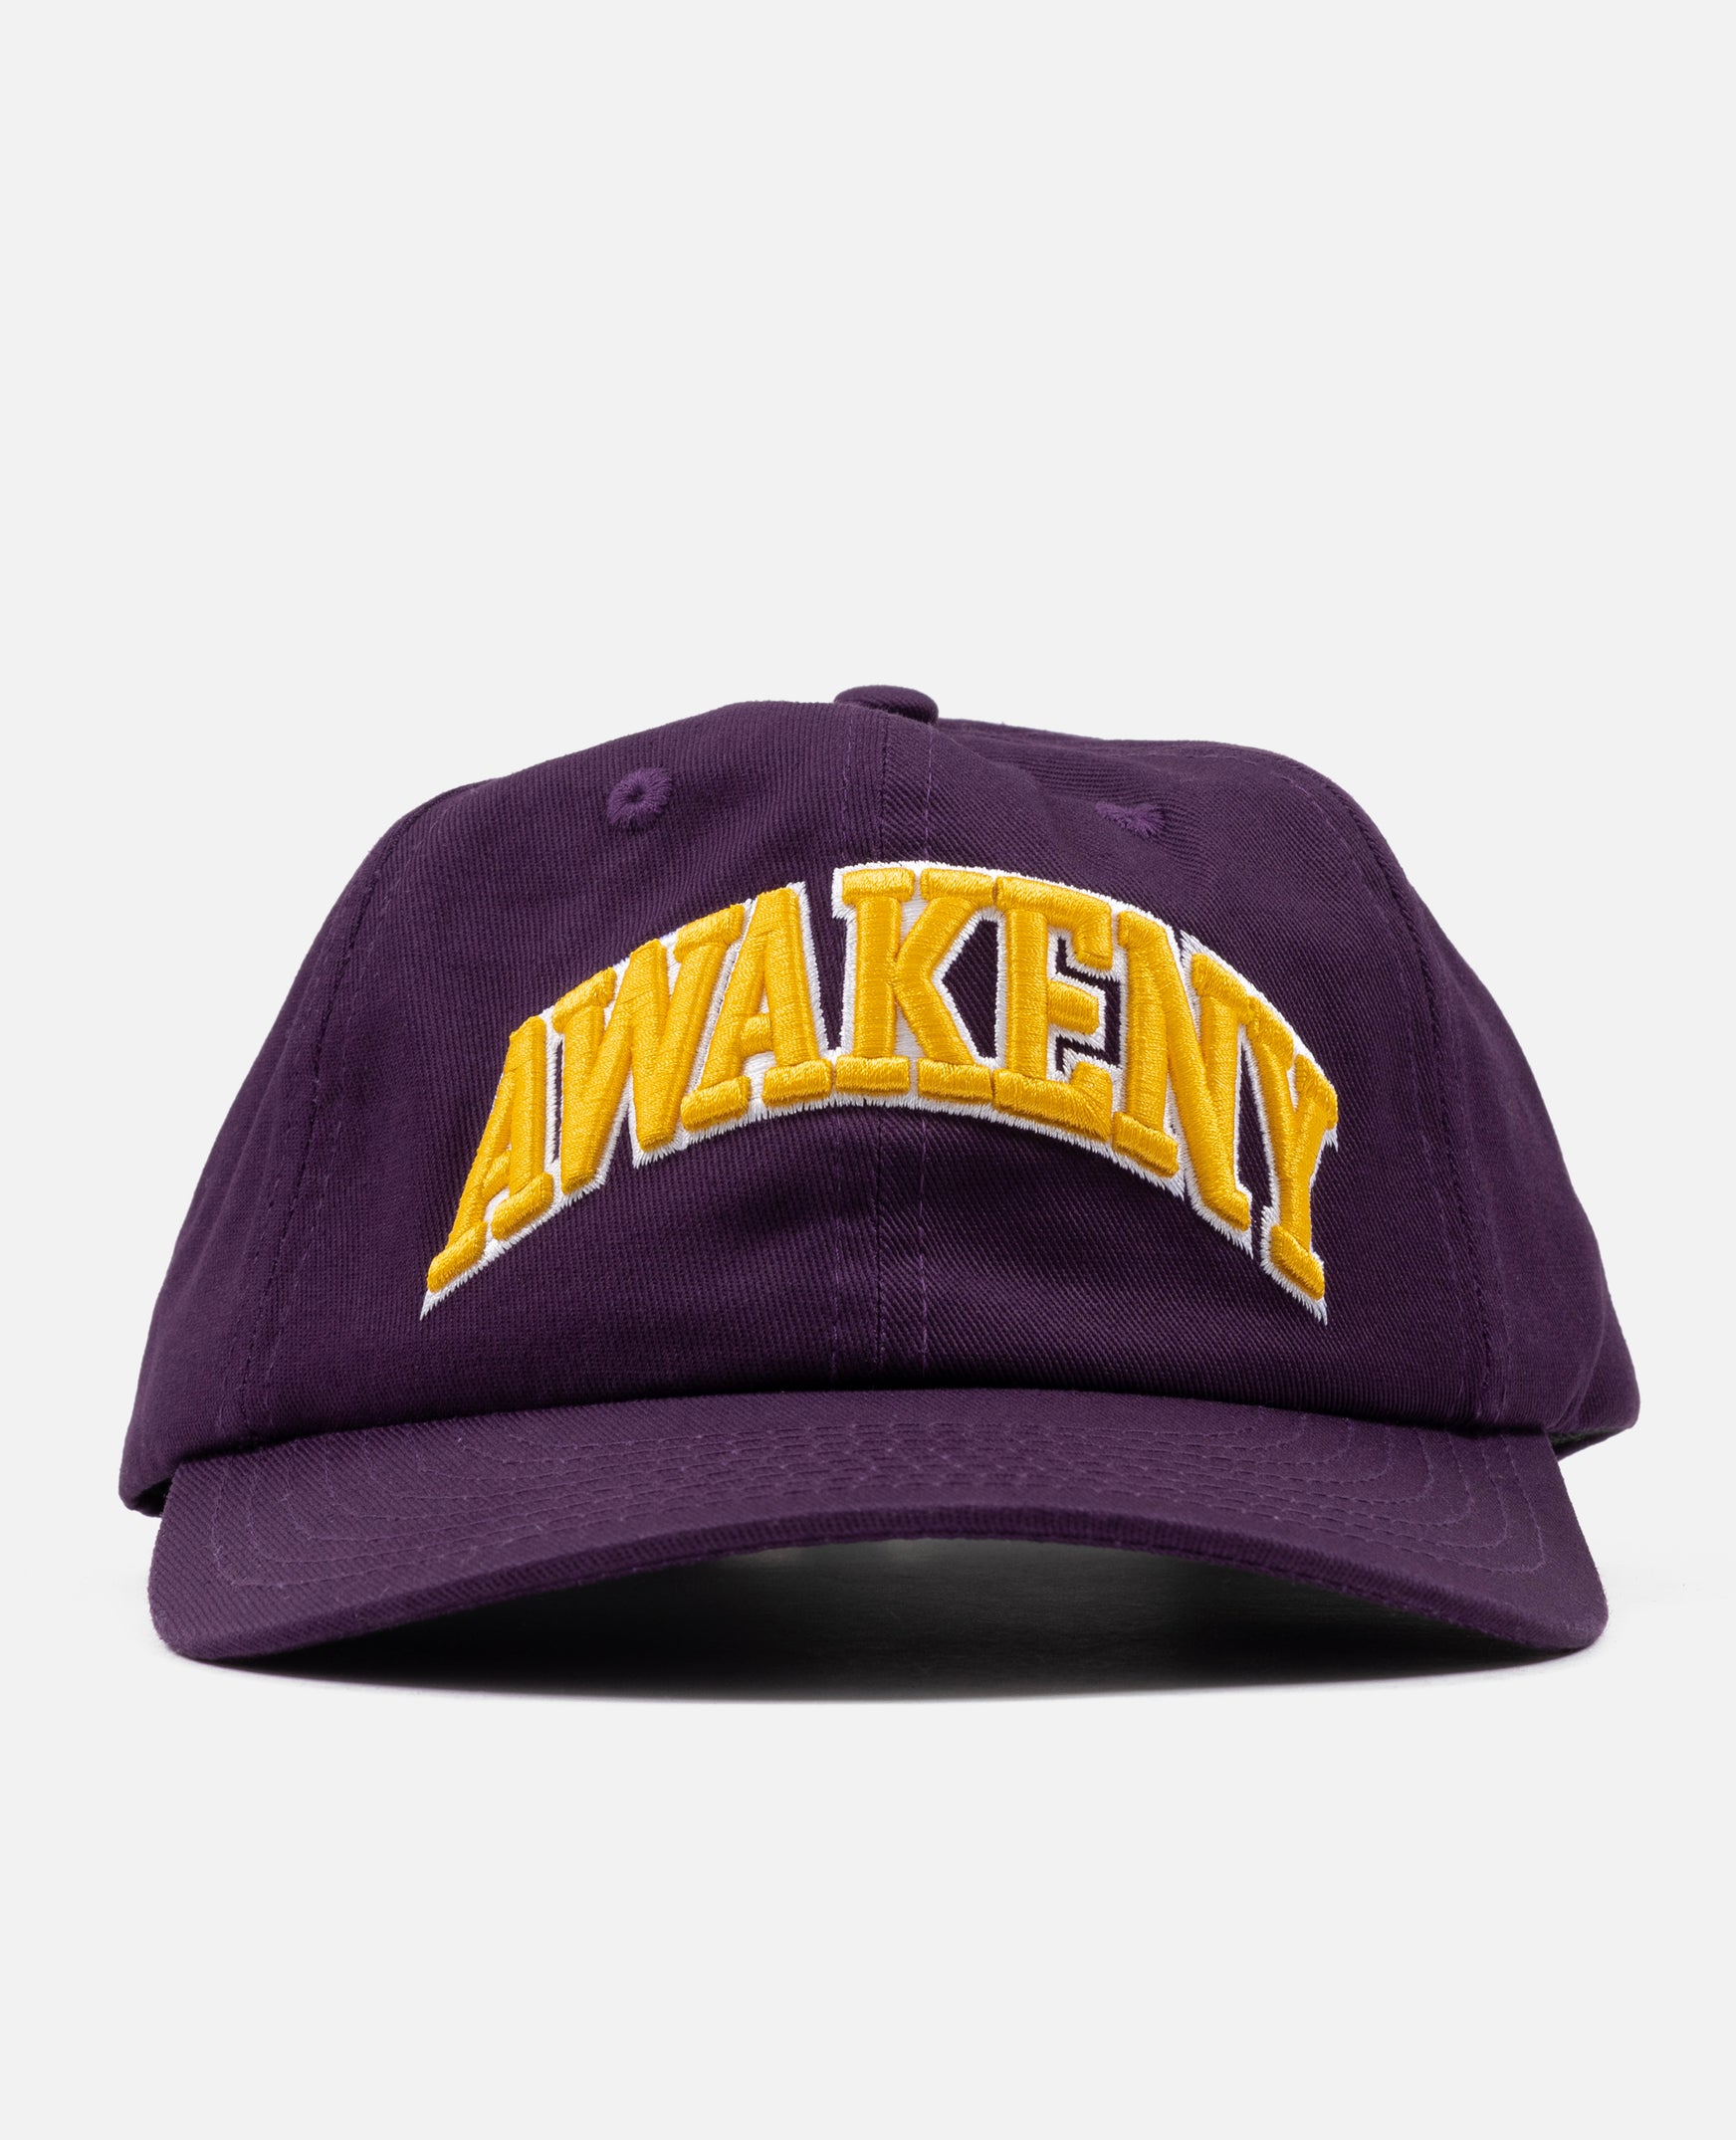 Awake NY 6 Panel Hat (Purple)